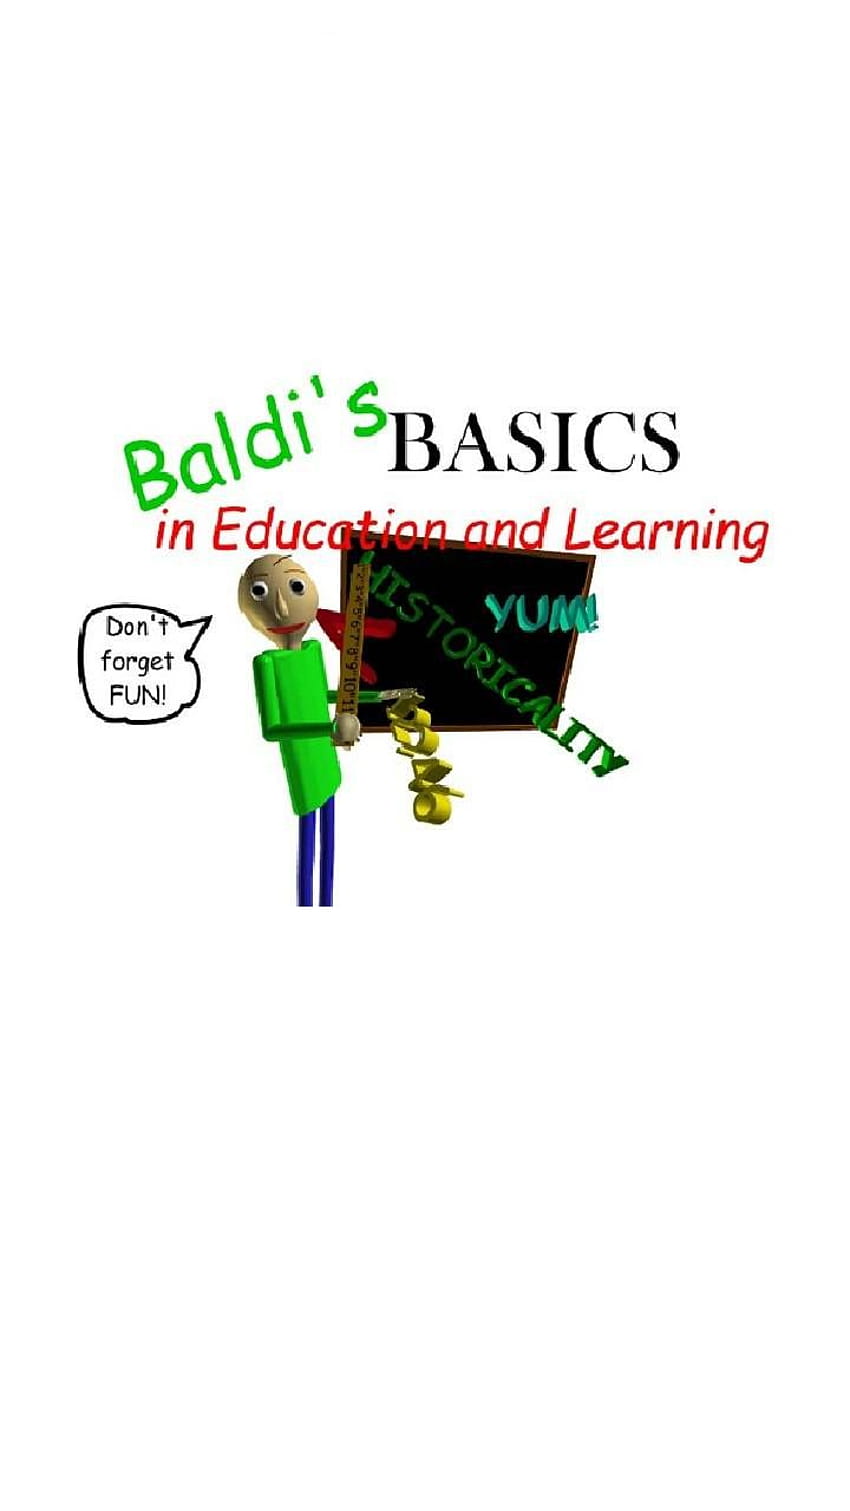 Baldi's basic in education and learning! by justarandomfruit on DeviantArt